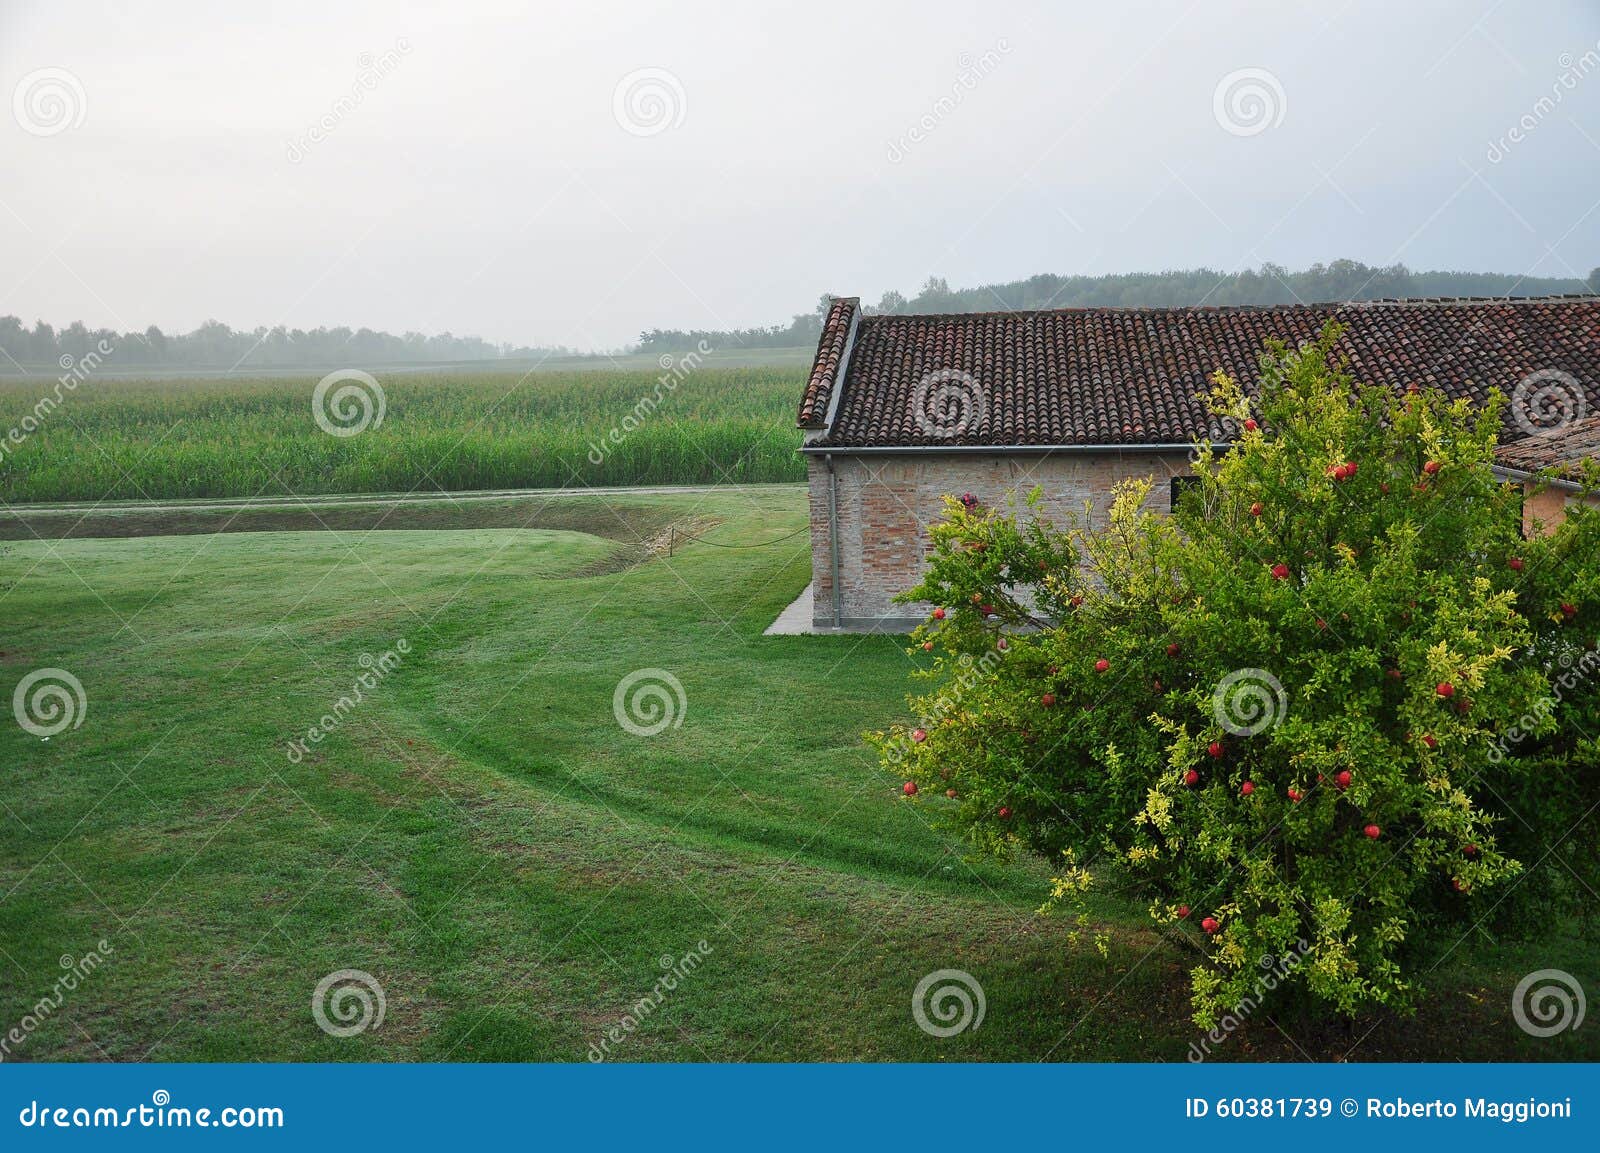 italian countryside - farmland by mantova